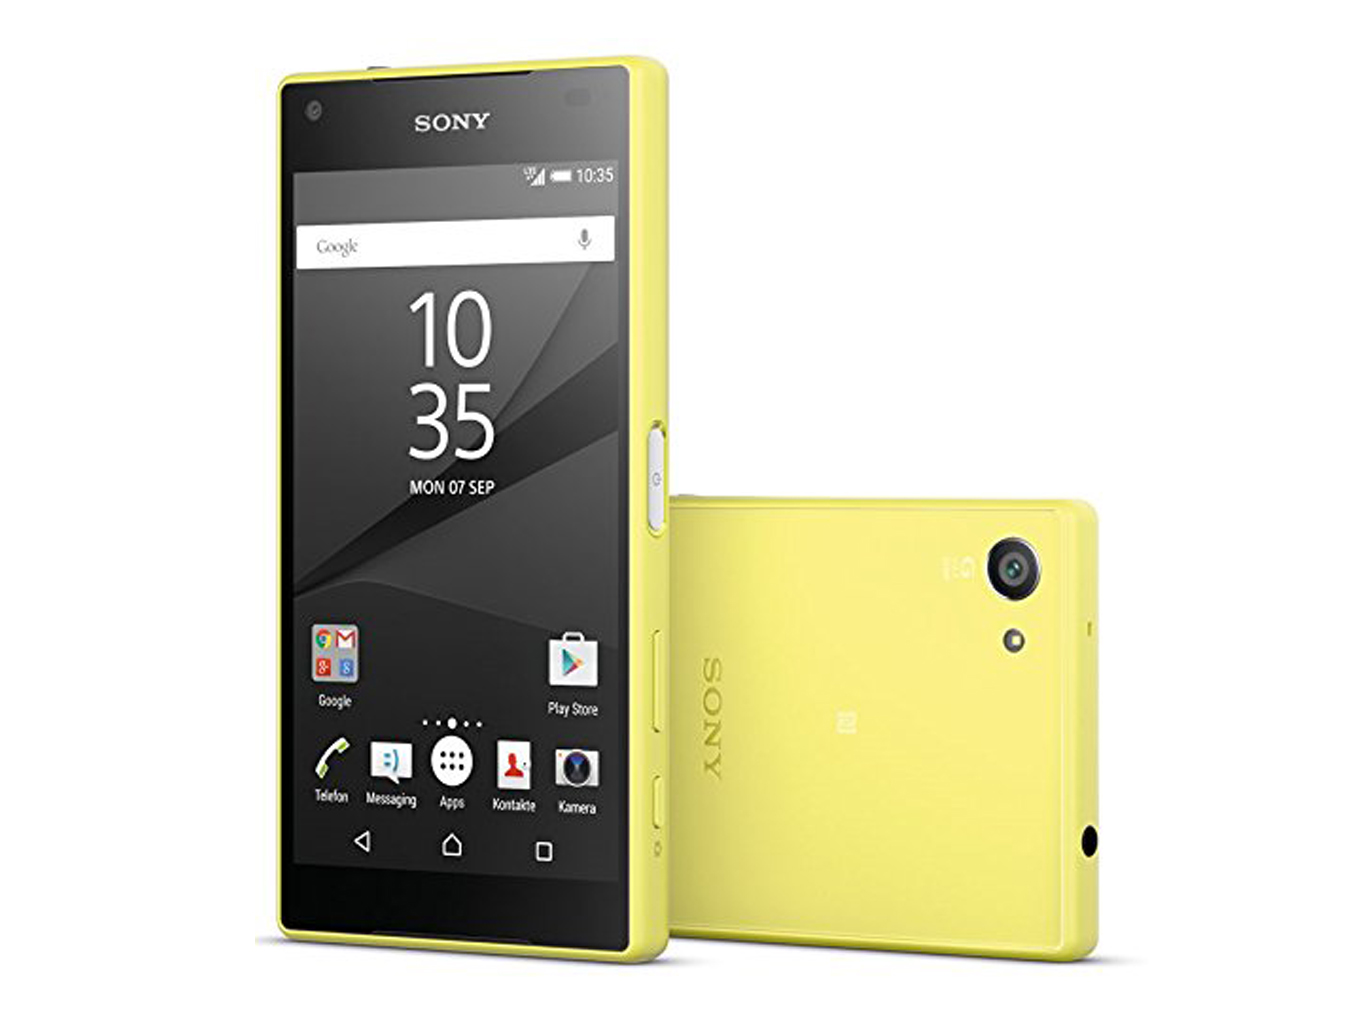 inhalen vervormen Split Sony Xperia Z5 Compact Smartphone Review - NotebookCheck.net Reviews